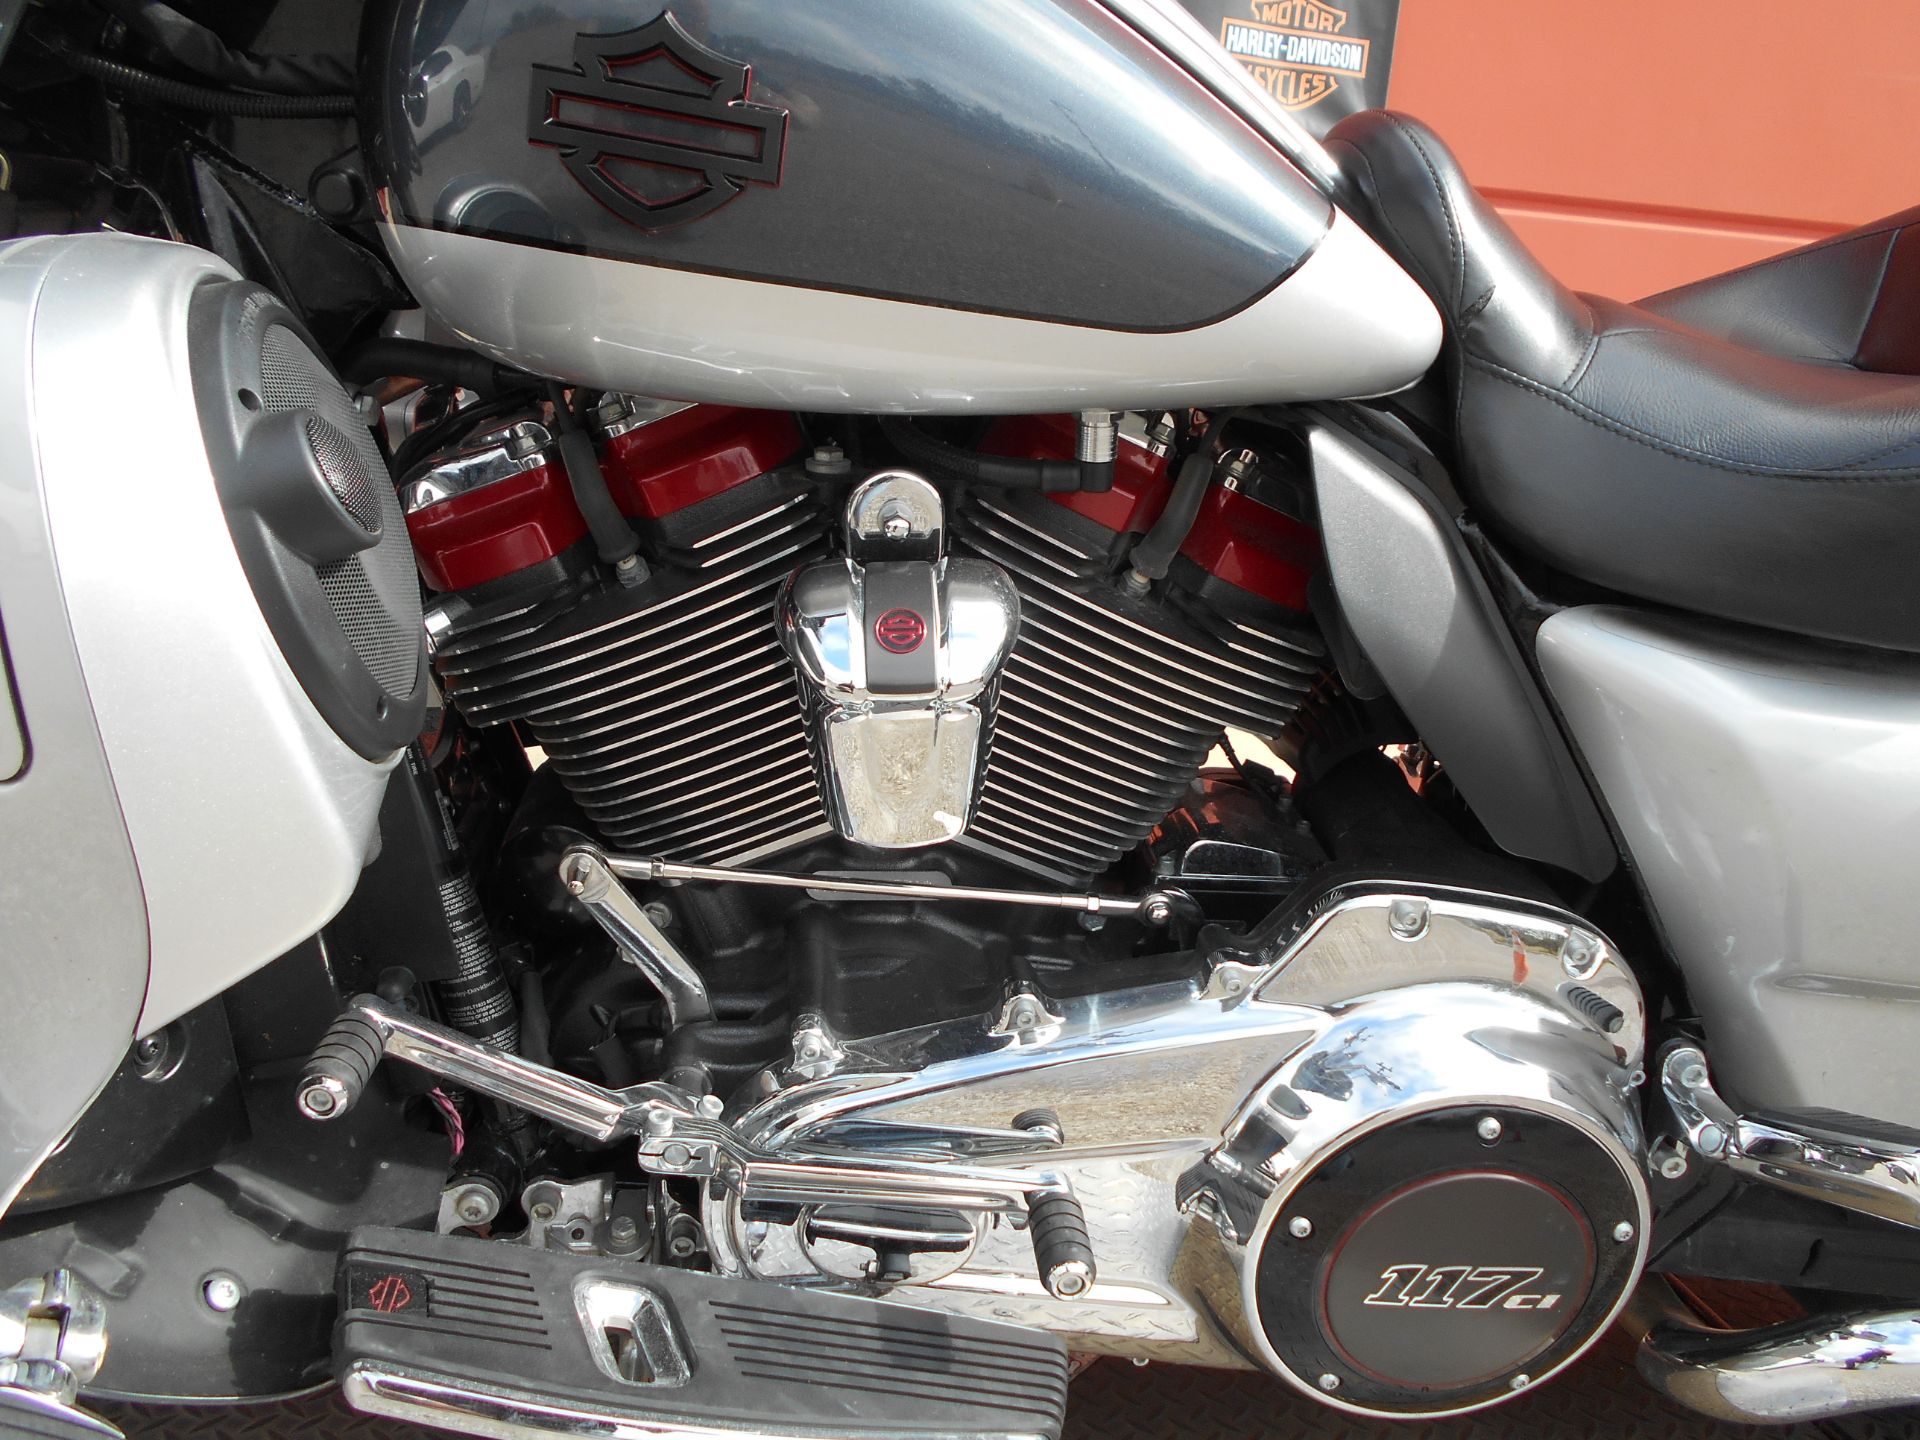 2019 Harley-Davidson CVO™ Street Glide® in Temple, Texas - Photo 7